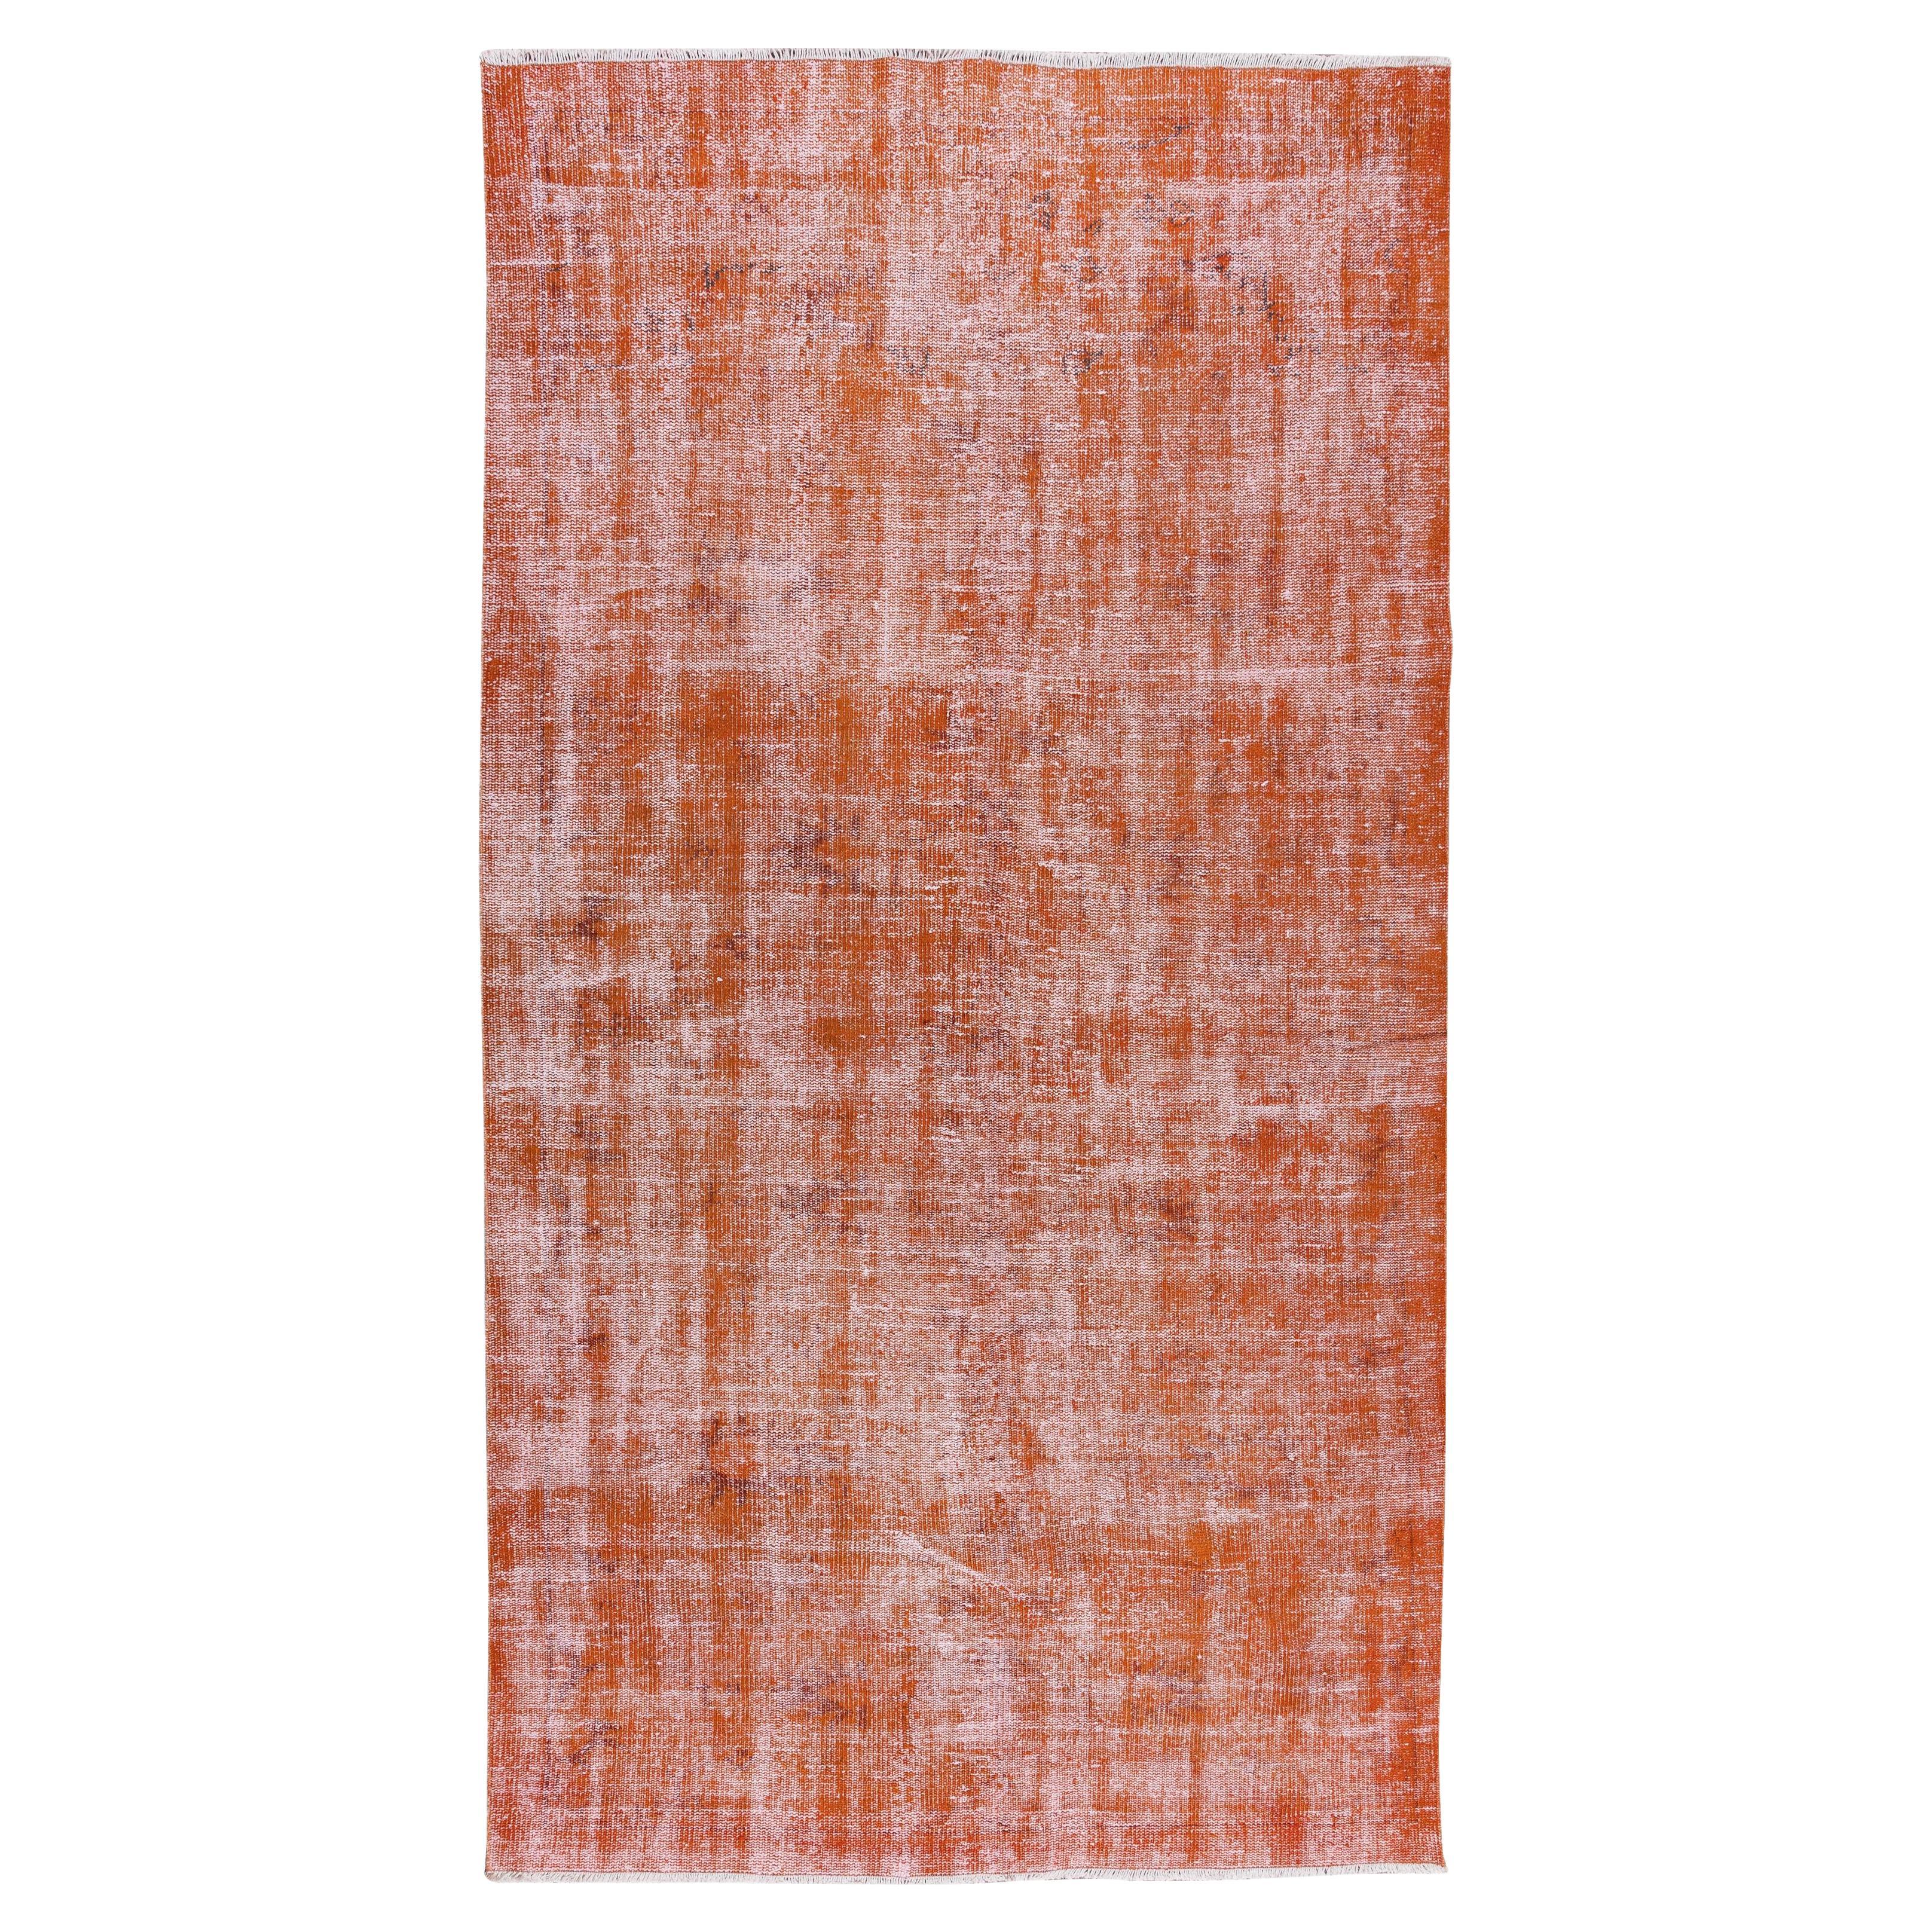 5.3x9.6 Ft Hand Knotted Turkish Area Rug, Distressed Vintage Orange Carpet